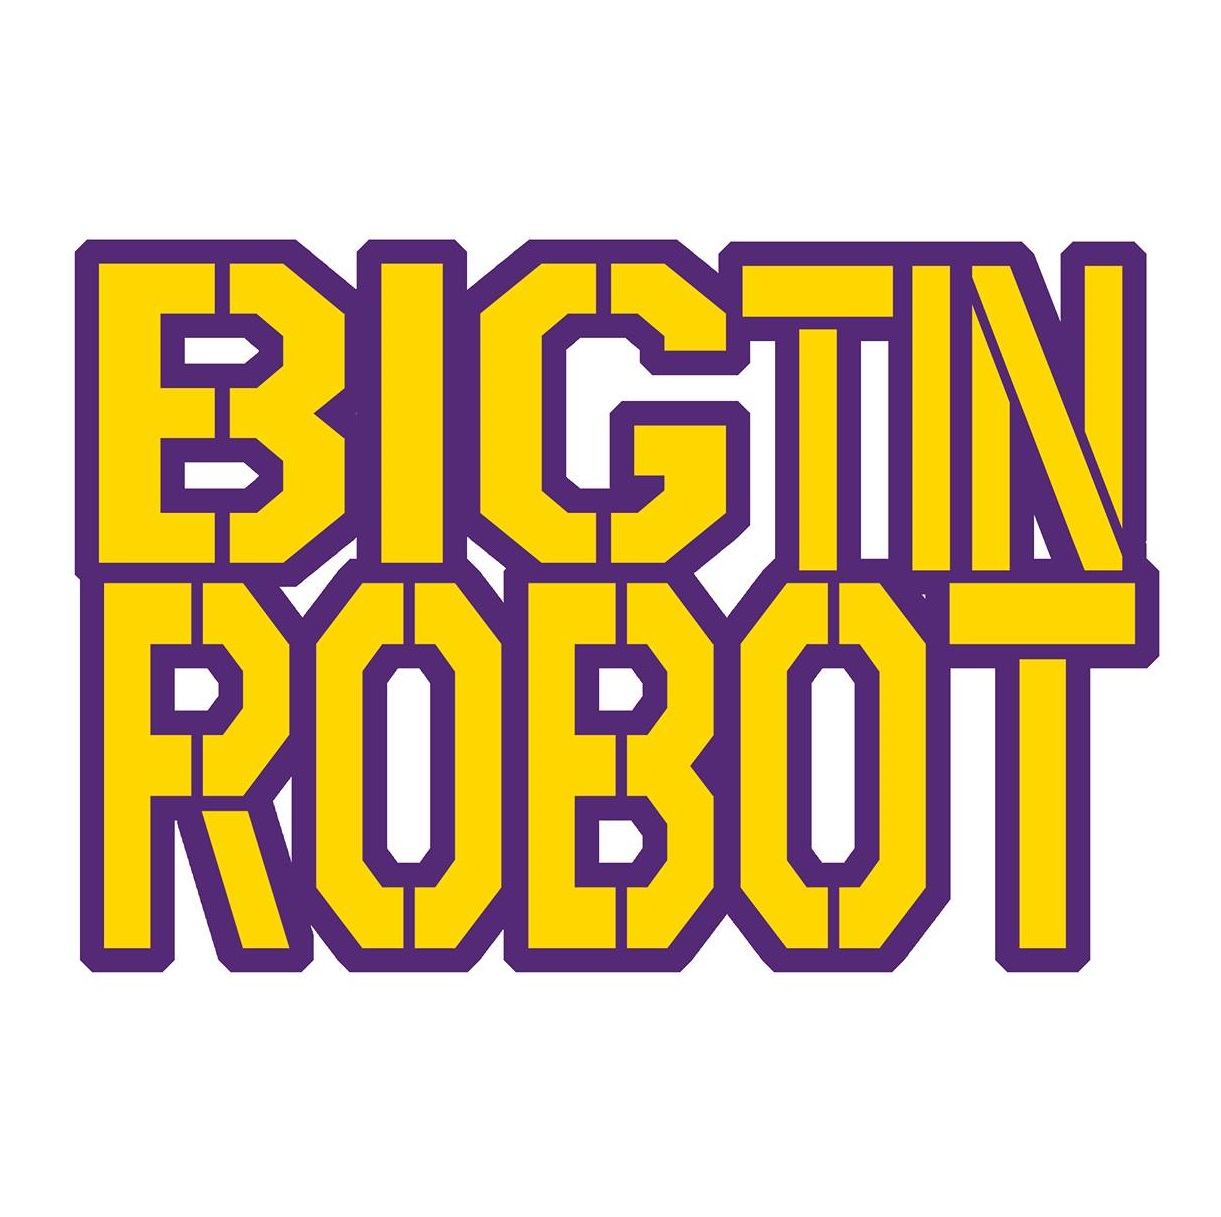 Big Tin Robot Toys and Collectibles